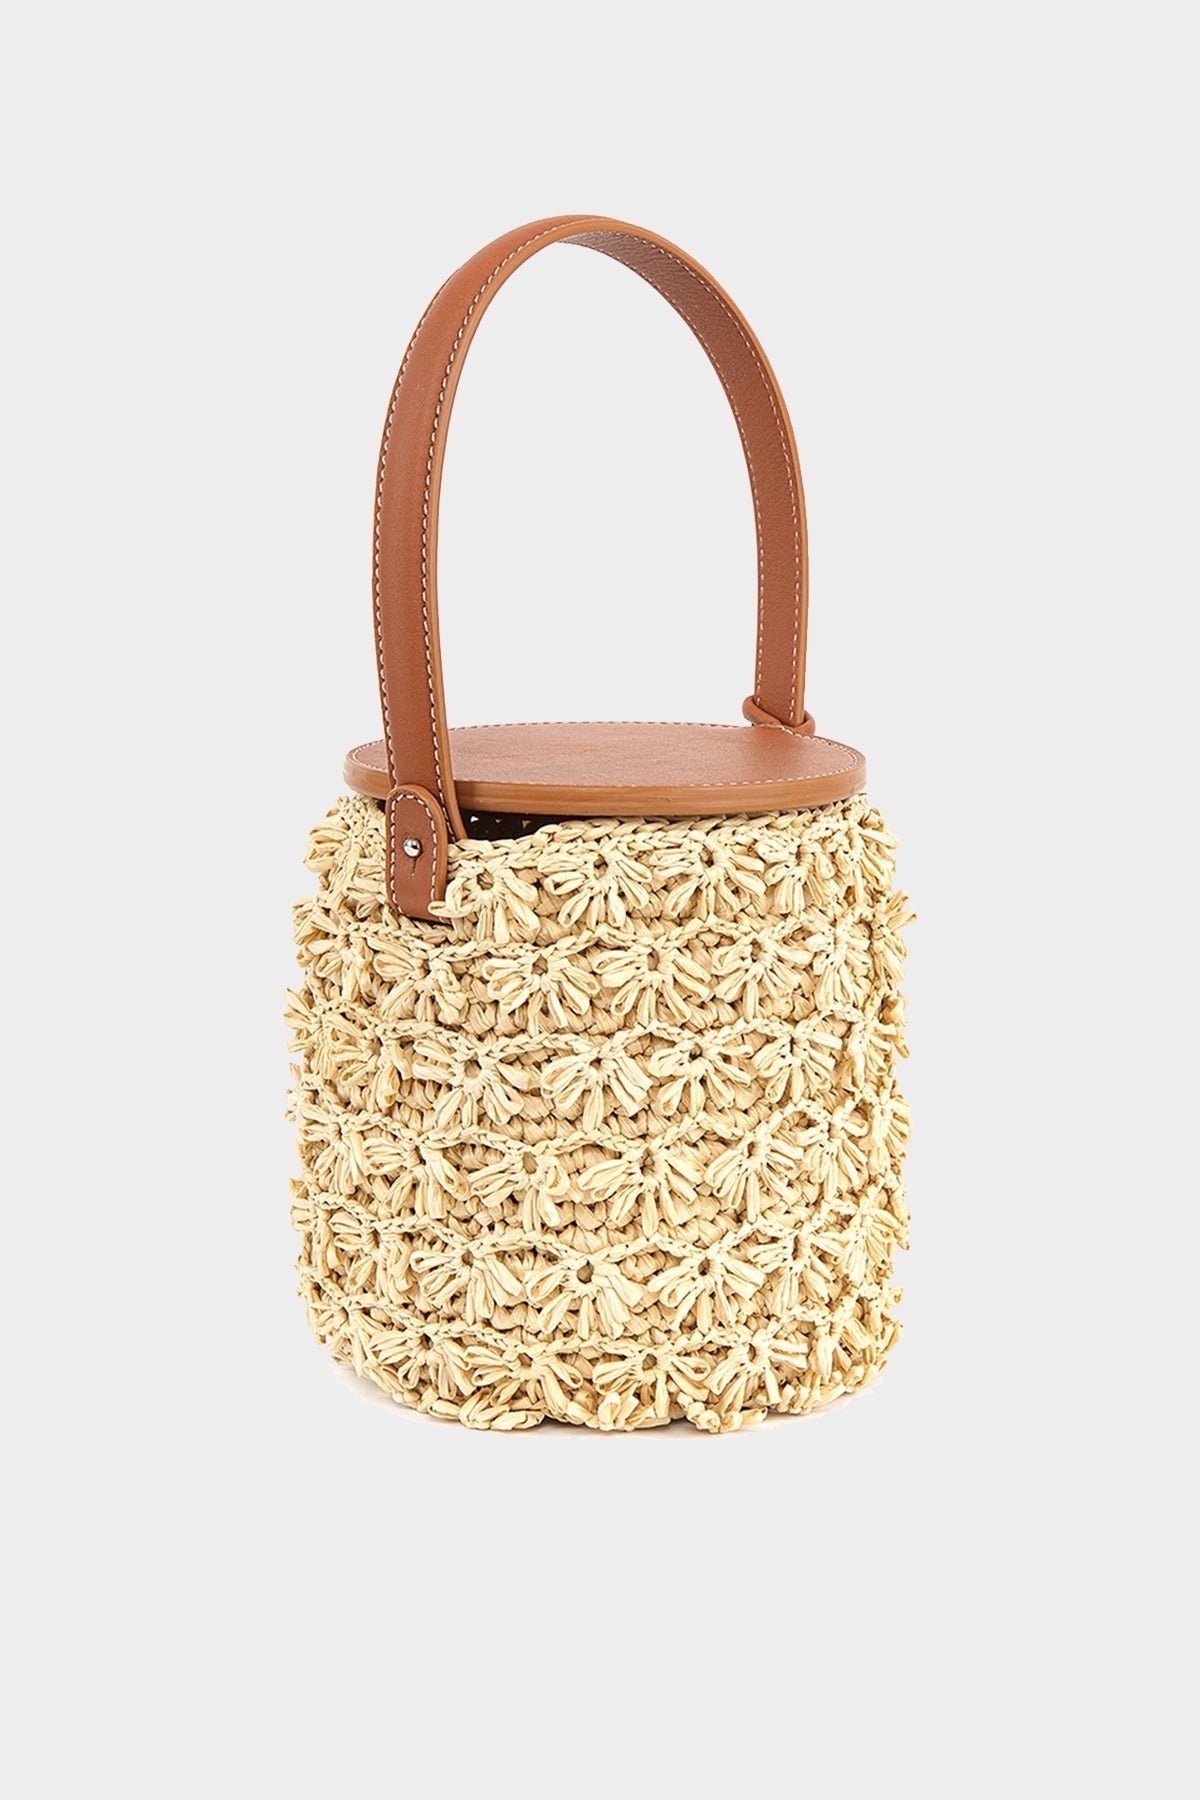 Lily Raffia Bow Bucket Bag in Terracota - shop-olivia.com